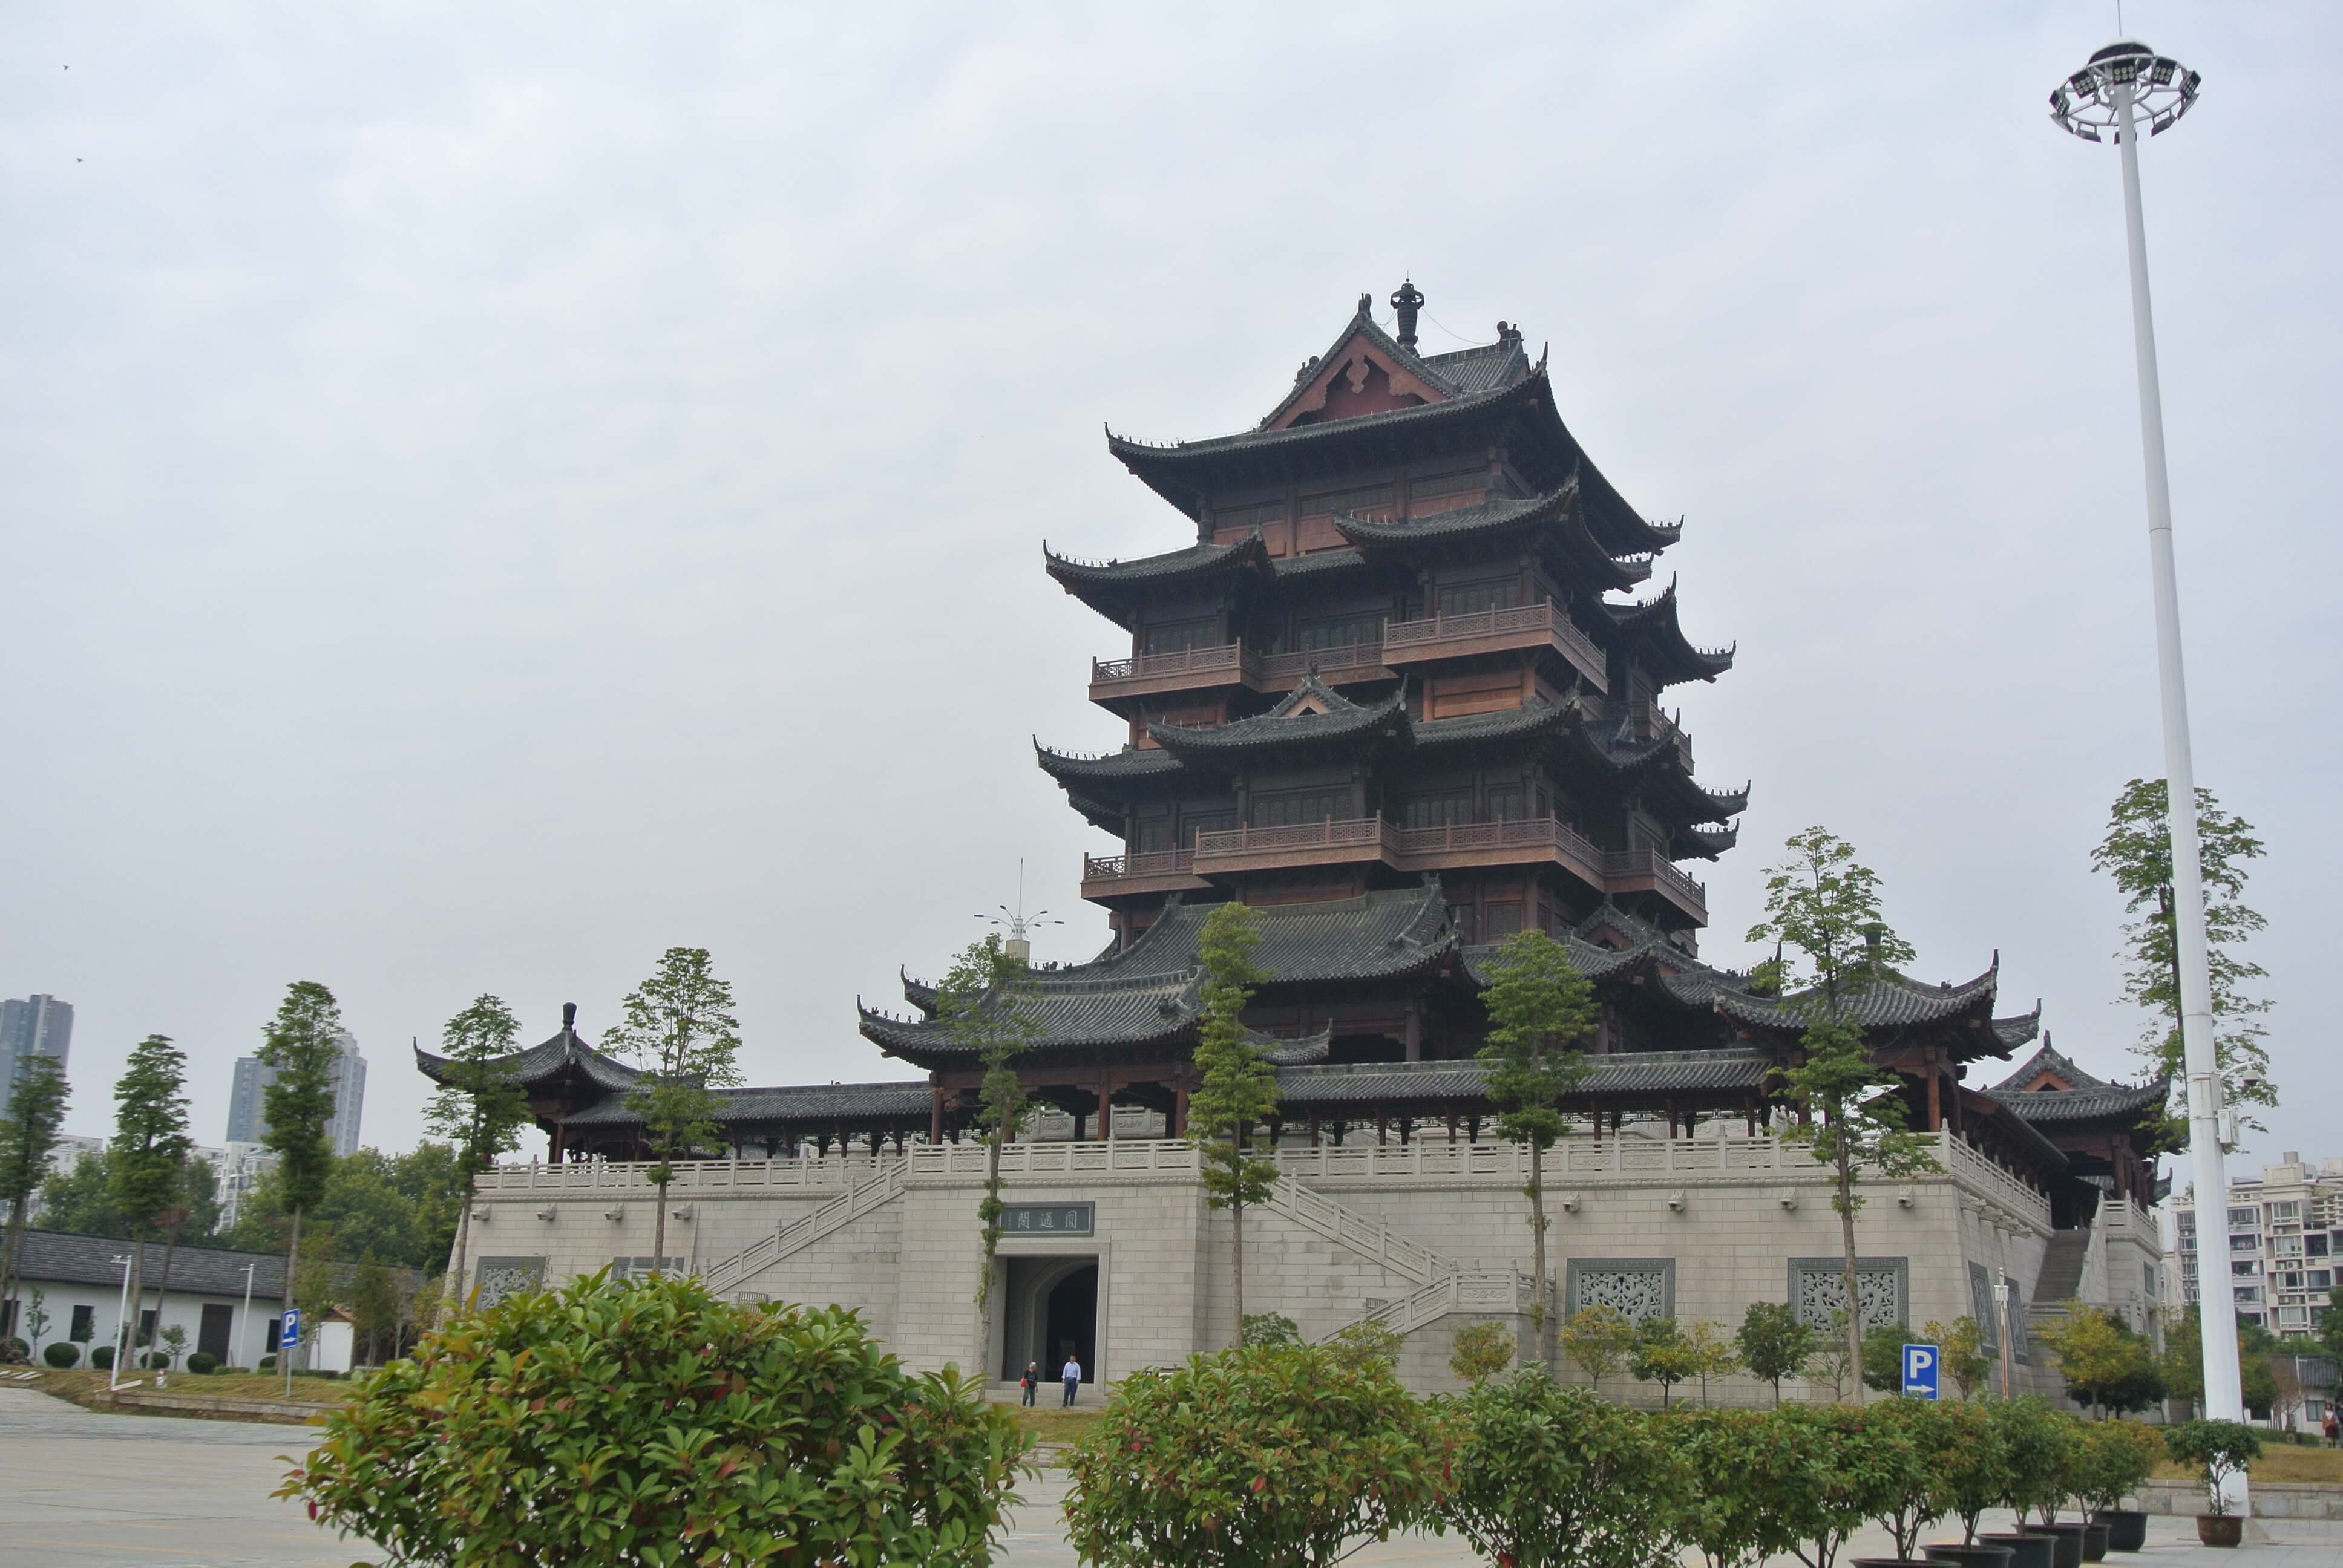 Guiyuan Temple Wuhan Hubei3 รถเข็นเดินทางเที่ยววัดกุยหยวนซื่อ